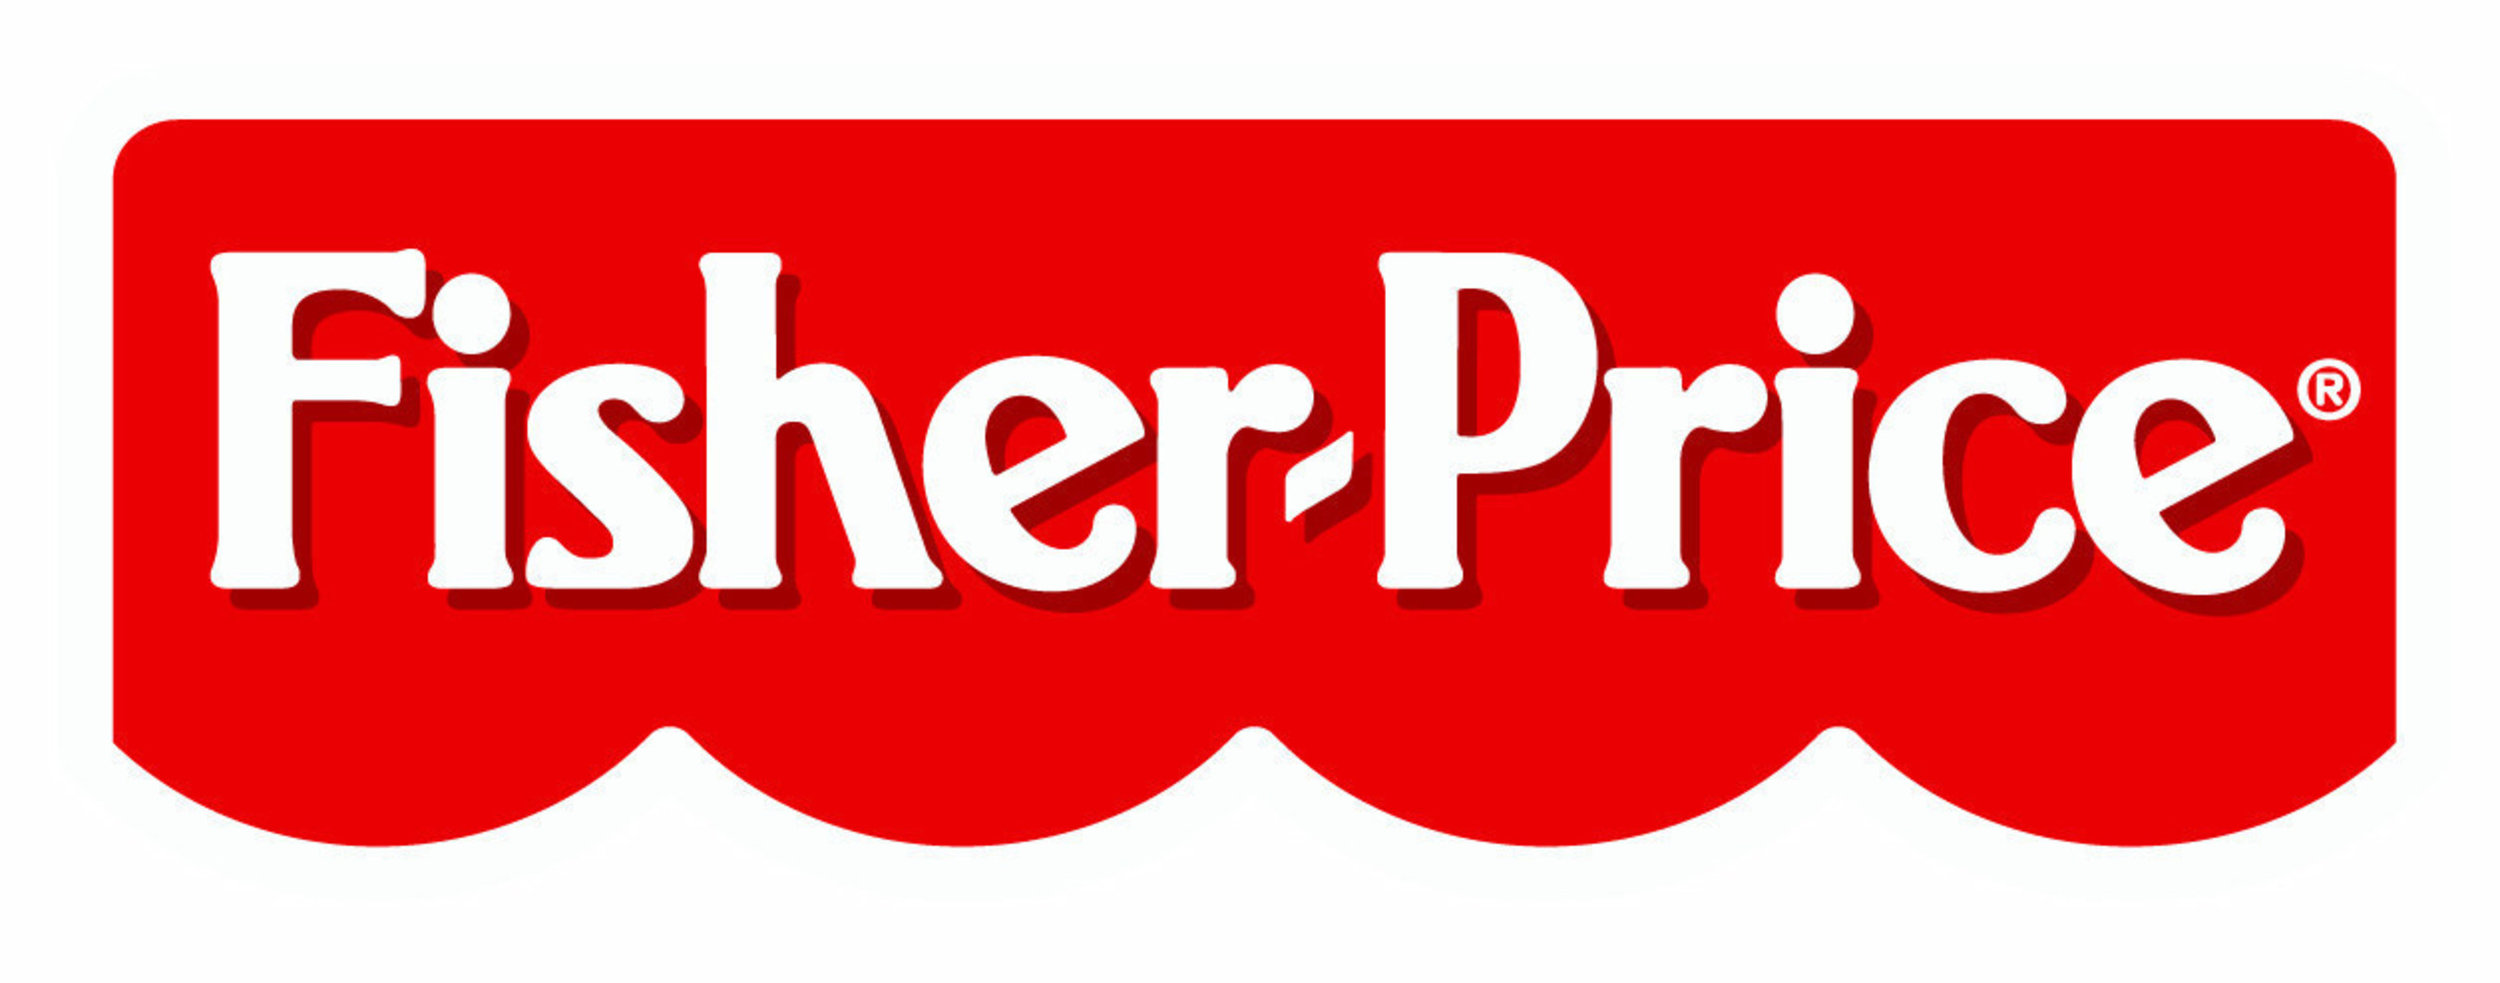 fisher price logo.jpg